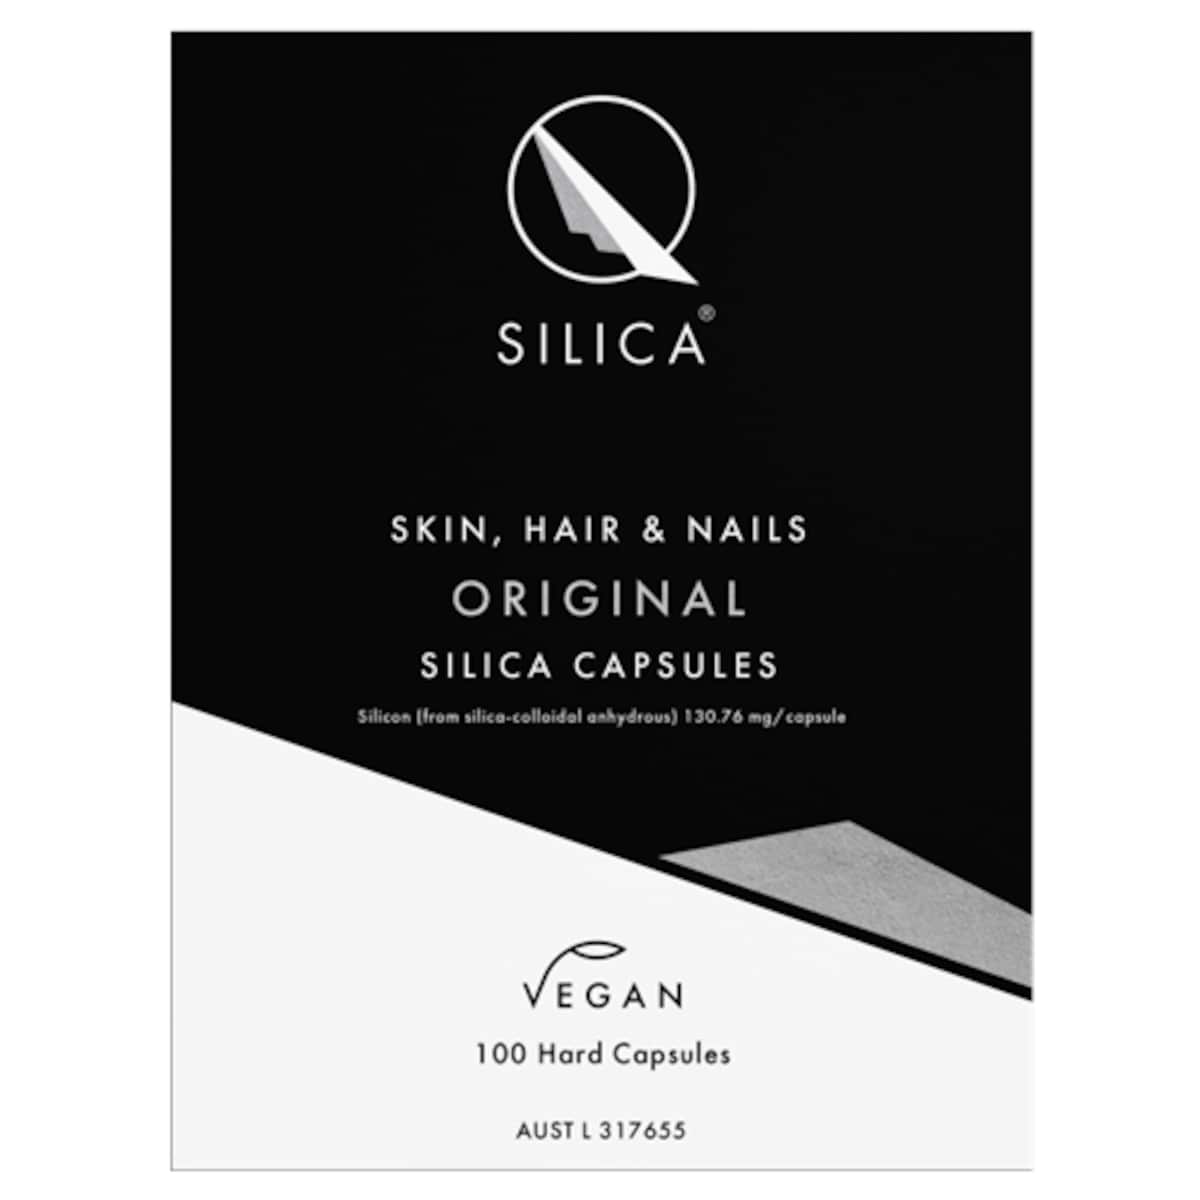 Qsilica Skin Hair & Nails Original 100 Hard Capsules